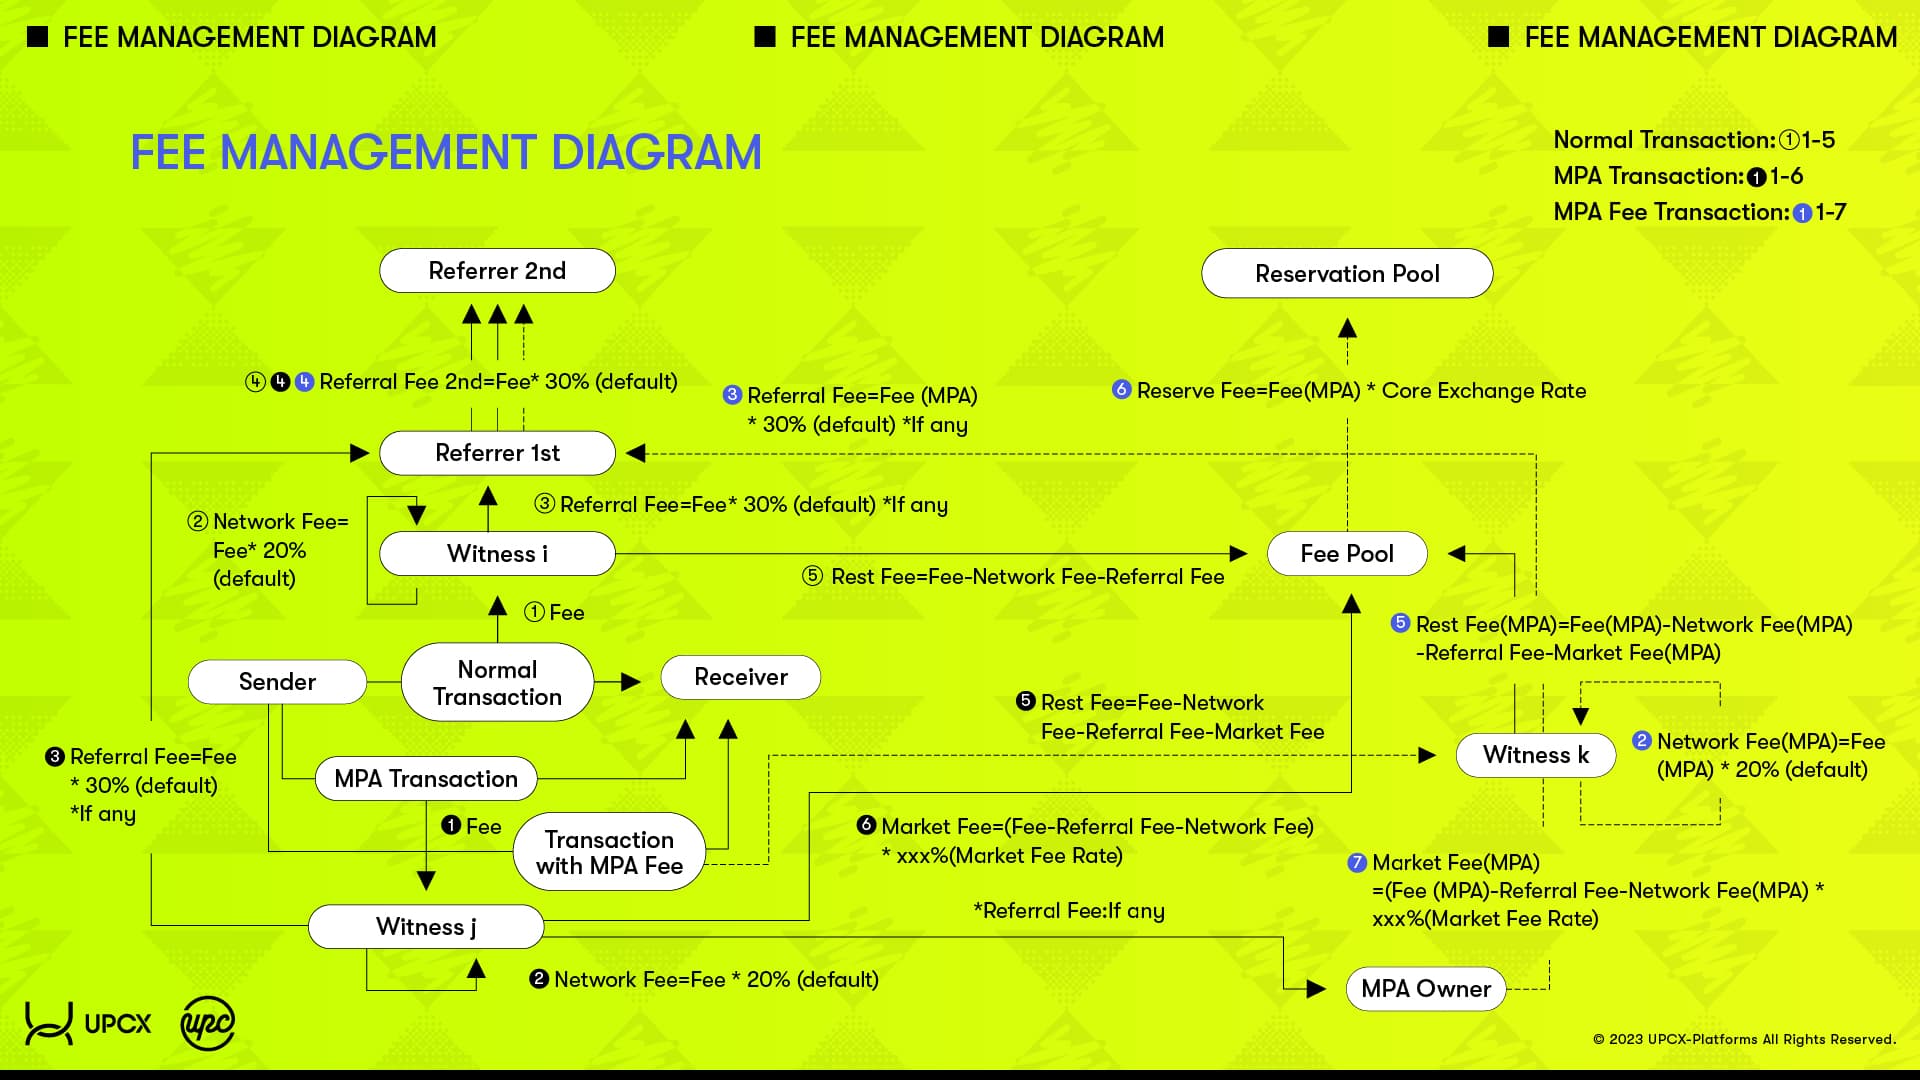 UPCX Fee Management Diagram